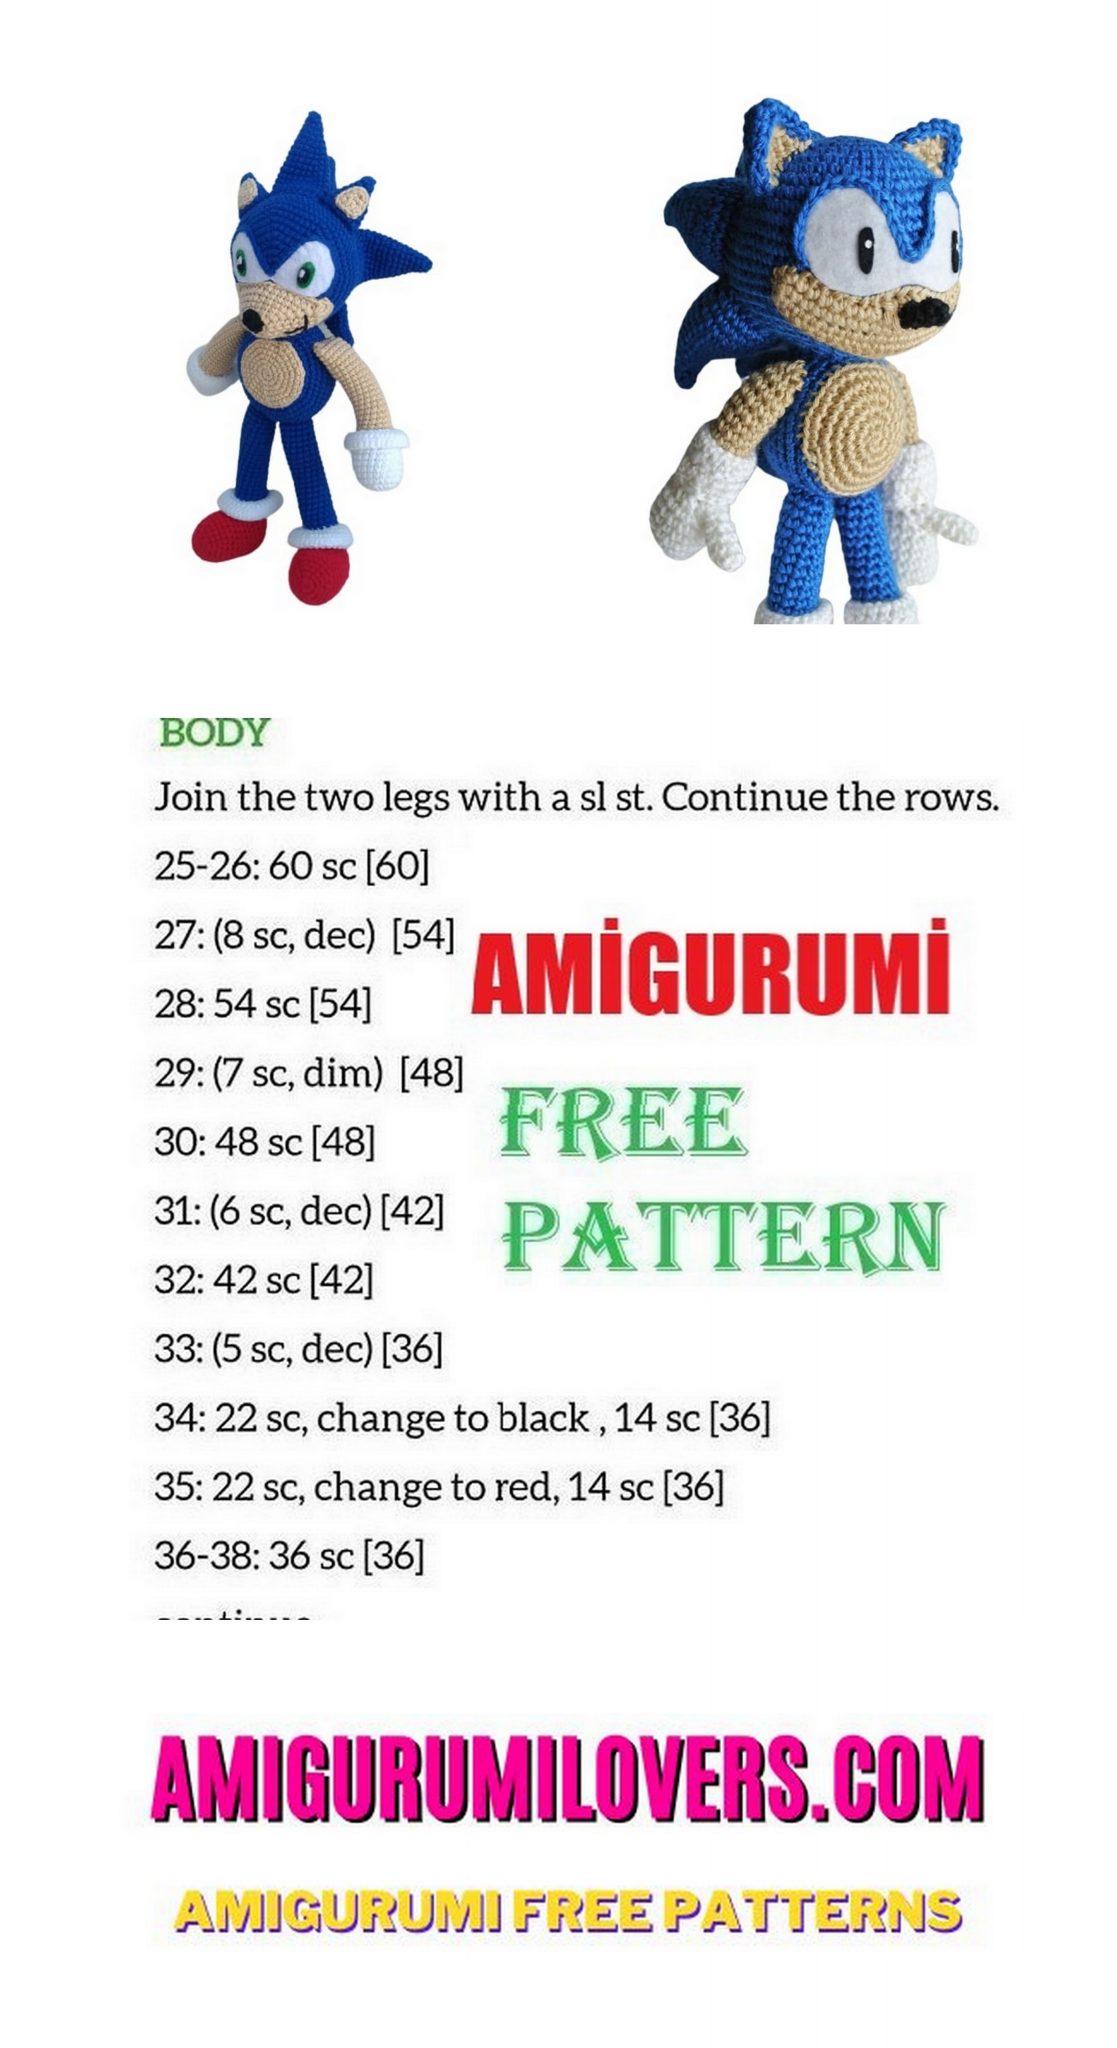 Super Sonic Amigurumi Free Crochet Pattern – Craft Your Own Speedster ...